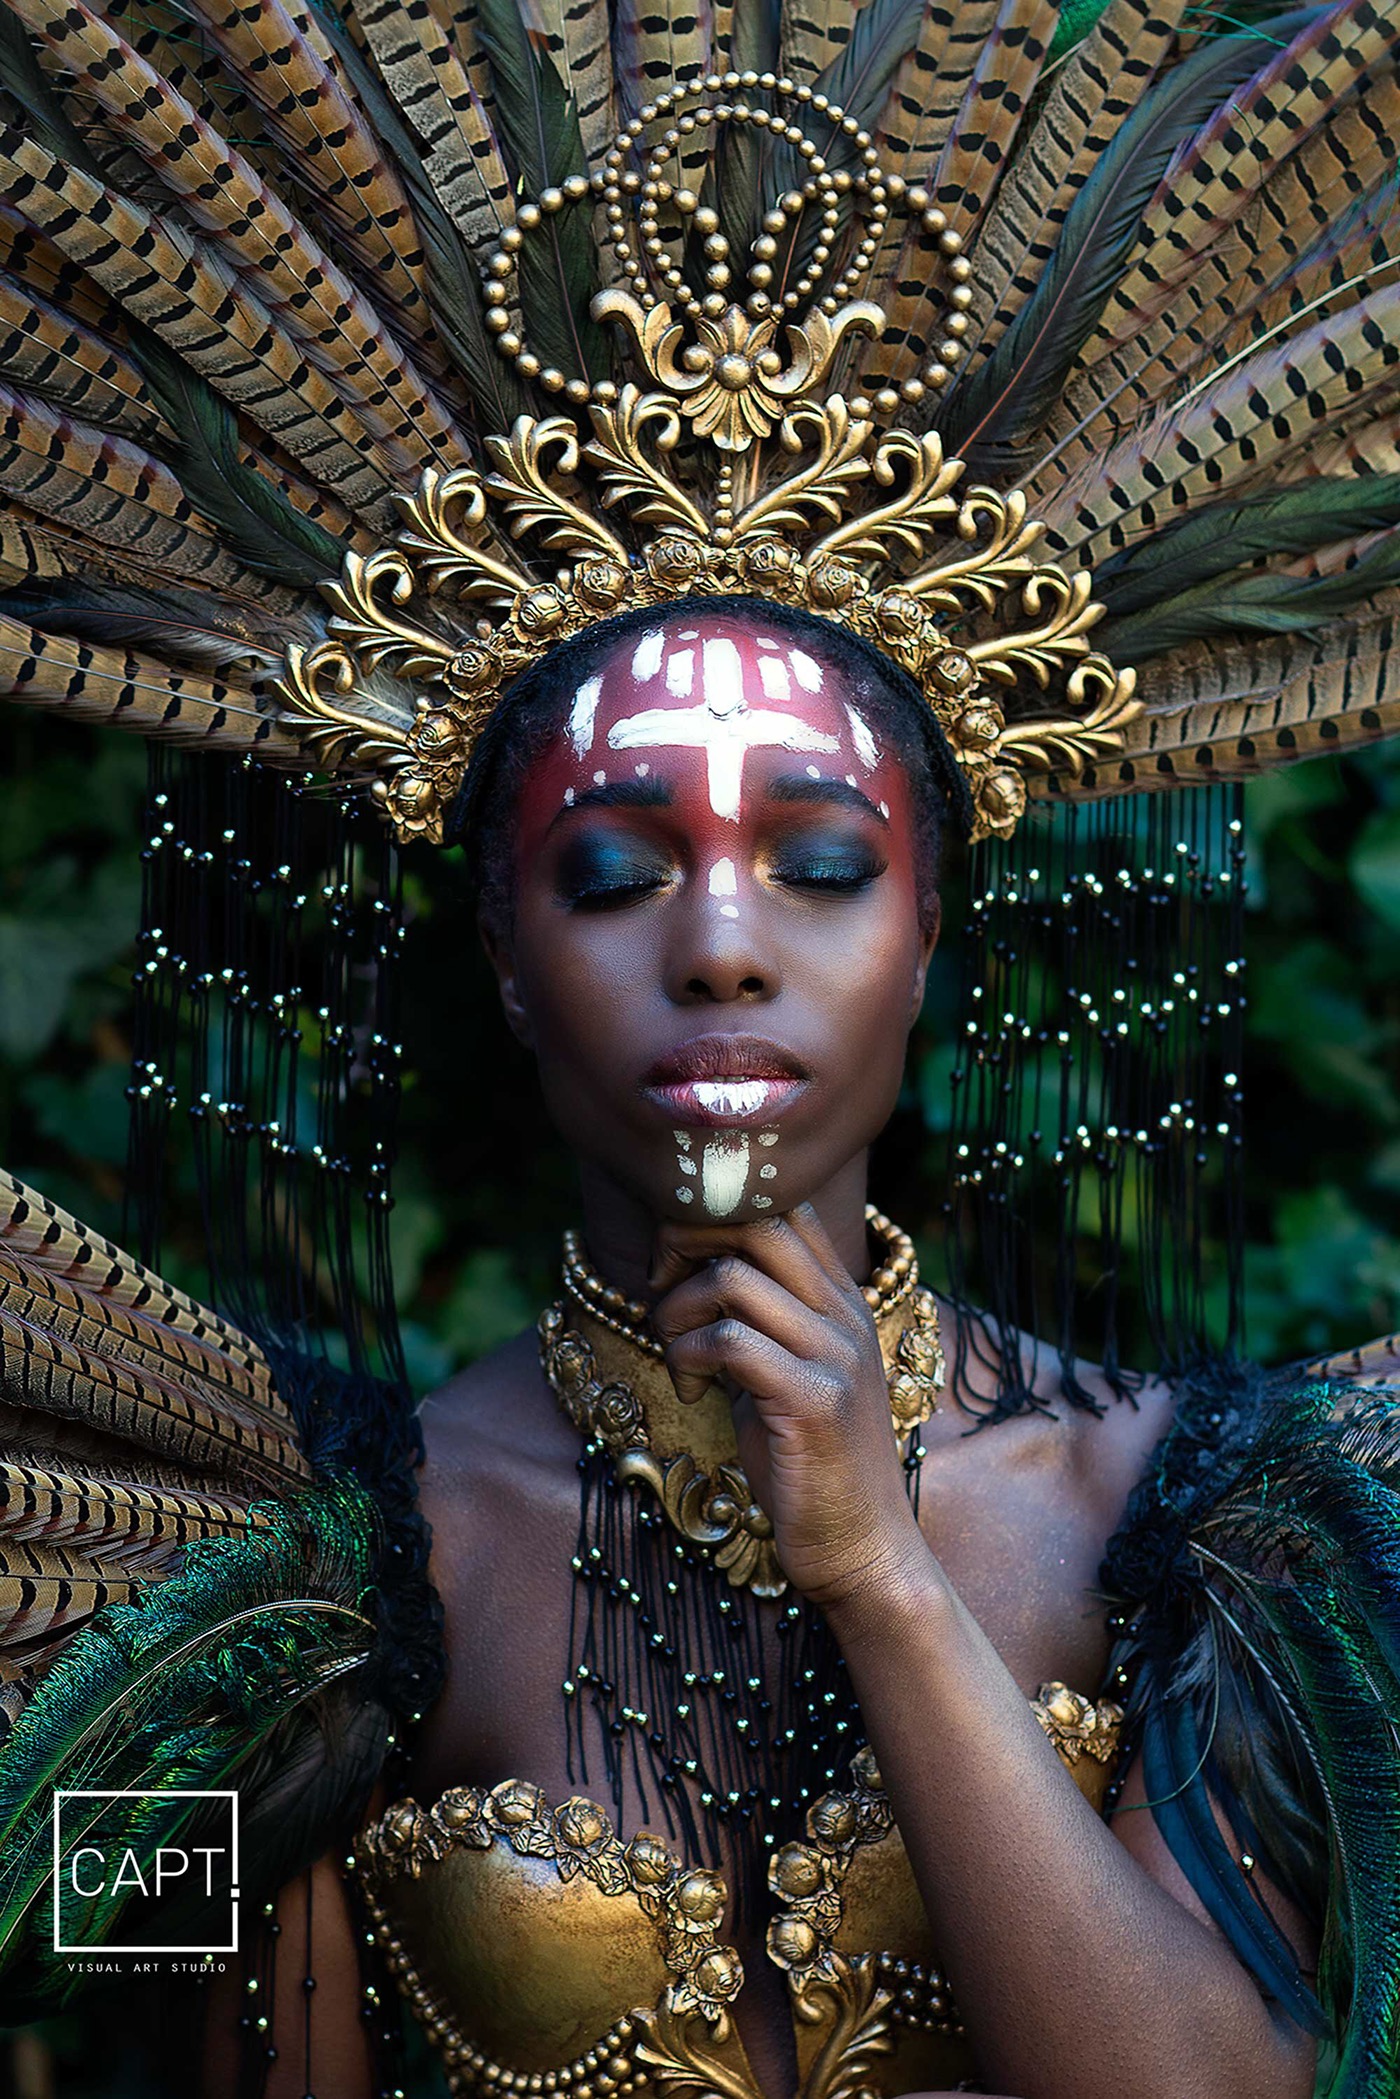 Africanqueen Africanculture tribalart Darkskin models artpho portraits SonyA7Rii Natural lighting MUA headpieces gold blackandwhite